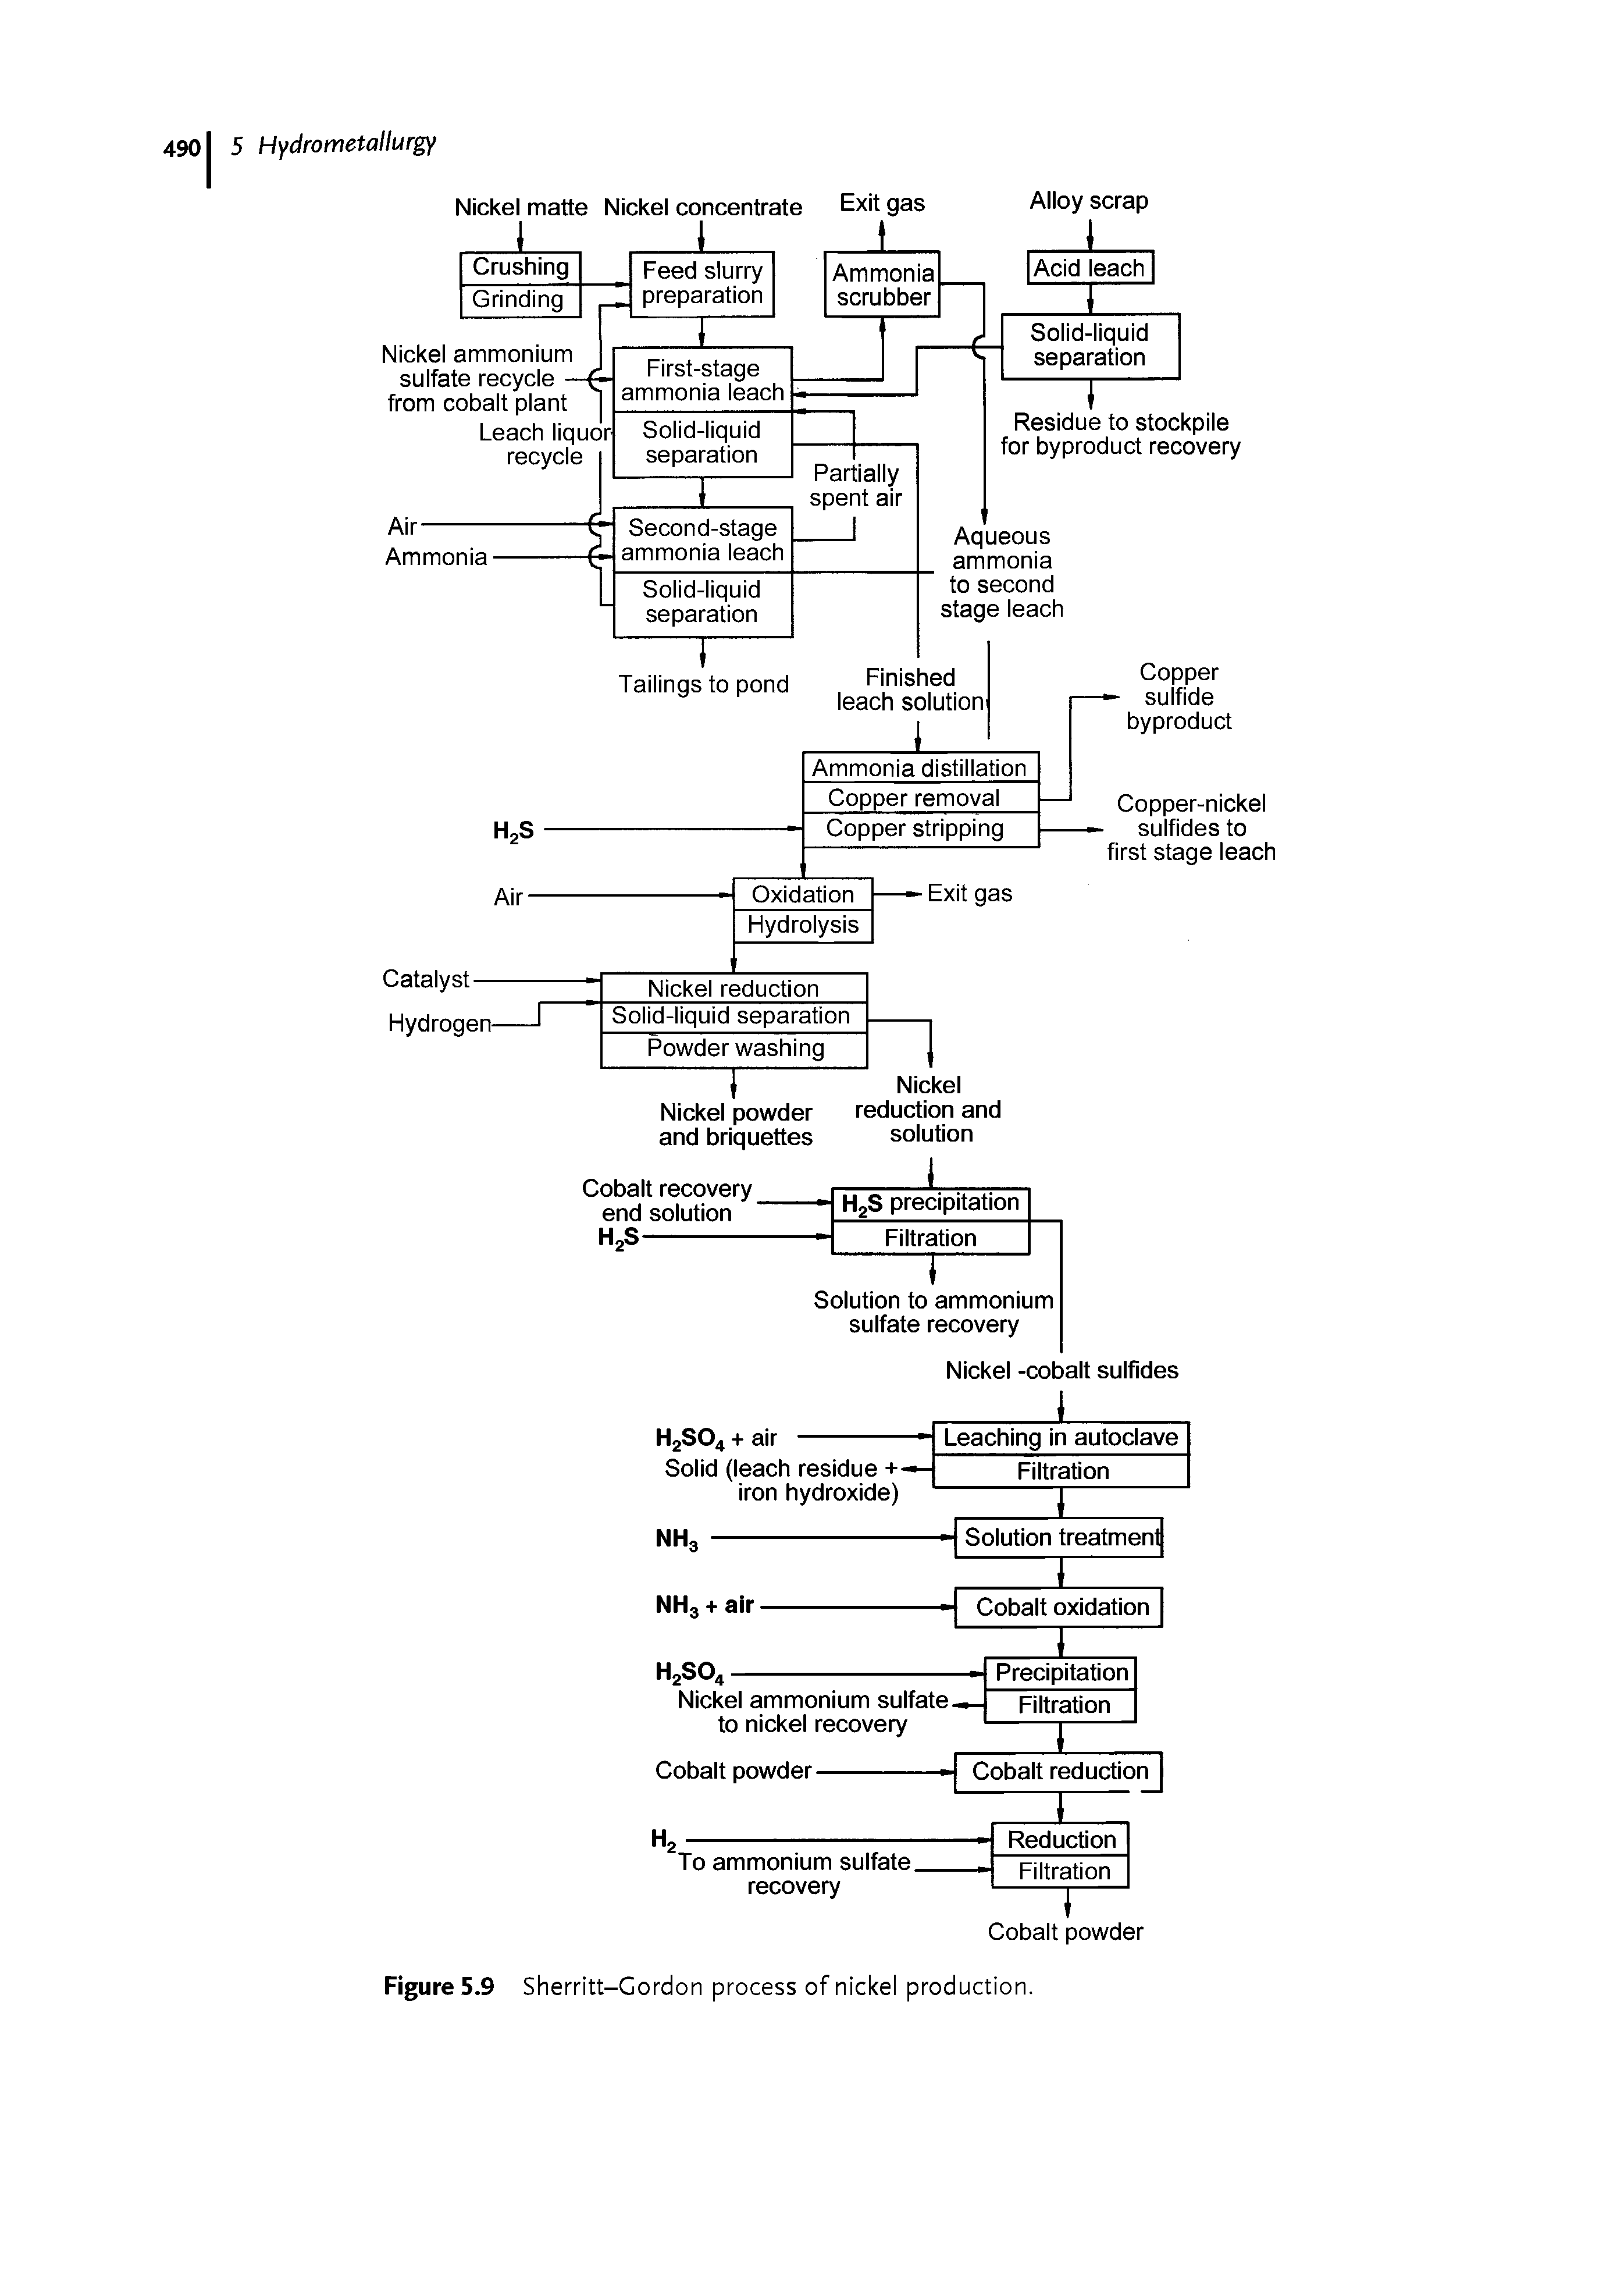 Figure 5.9 Sherritt-Gordon process of nickel production.